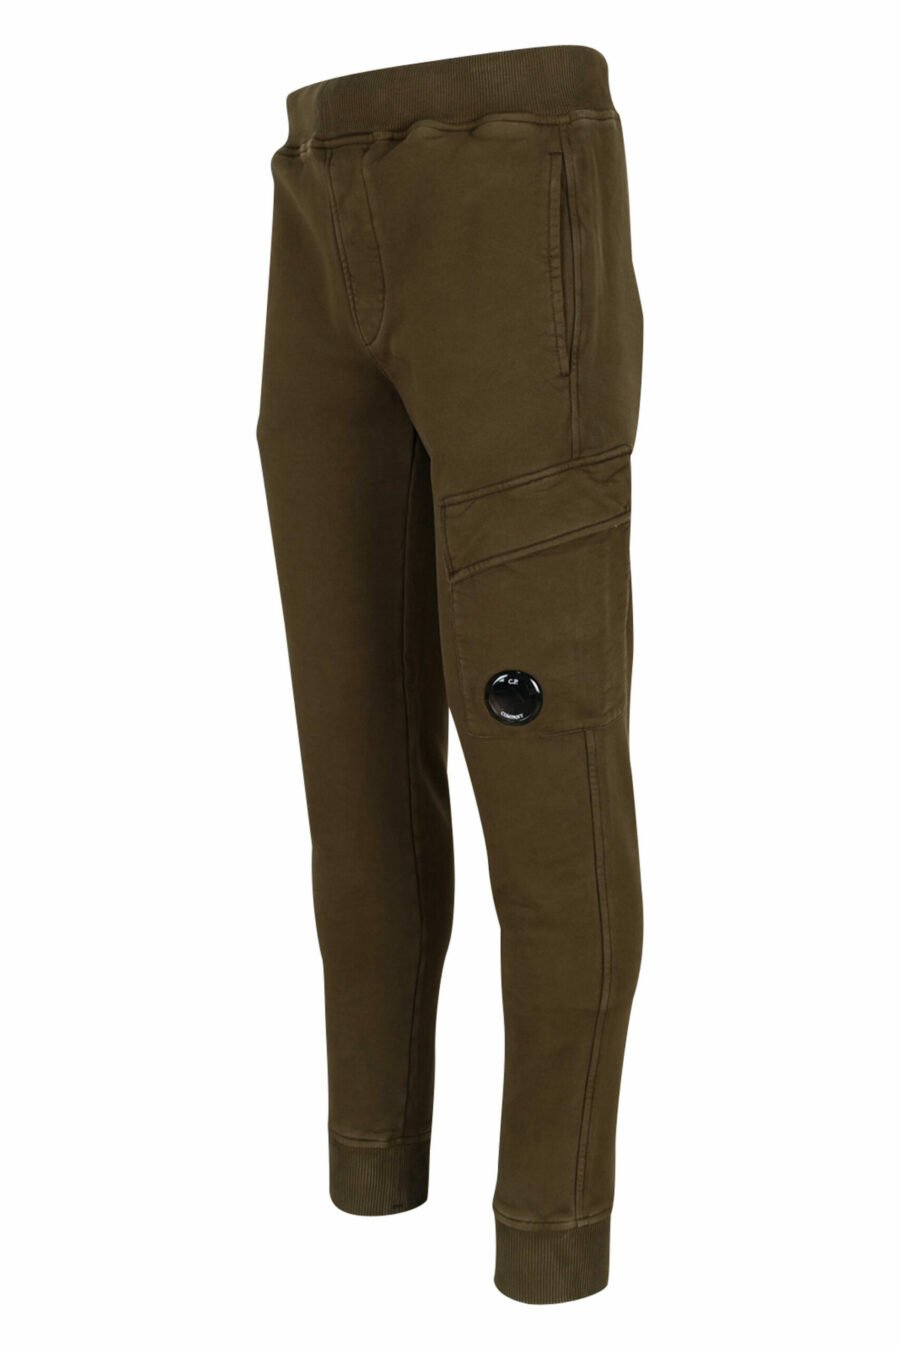 Pantalón de chándal verde militar con bolsillos laterales y logo lente - 7620943651423 1 scaled